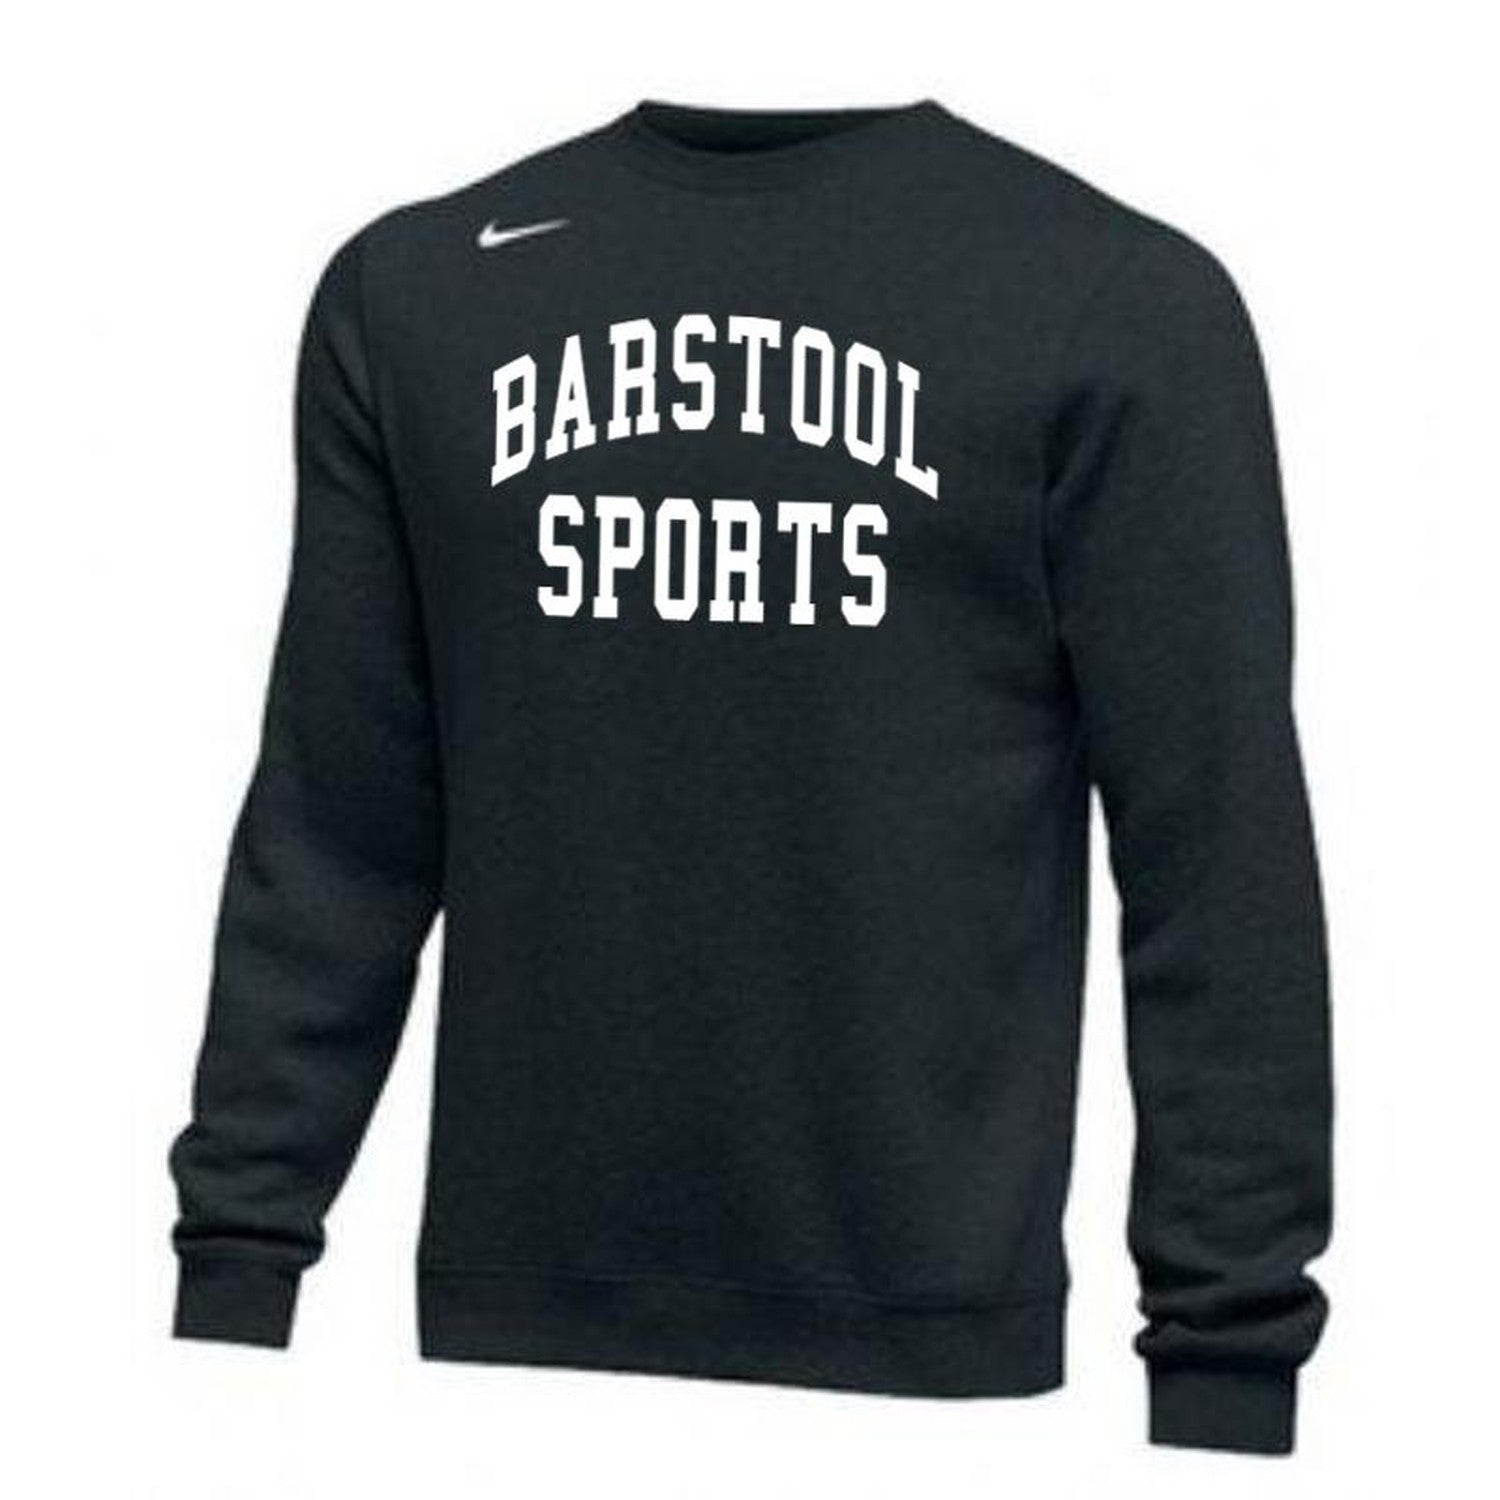 Barstool Sports Nike Crewneck-Crewnecks-Barstool Sports-Black-S-Barstool Sports